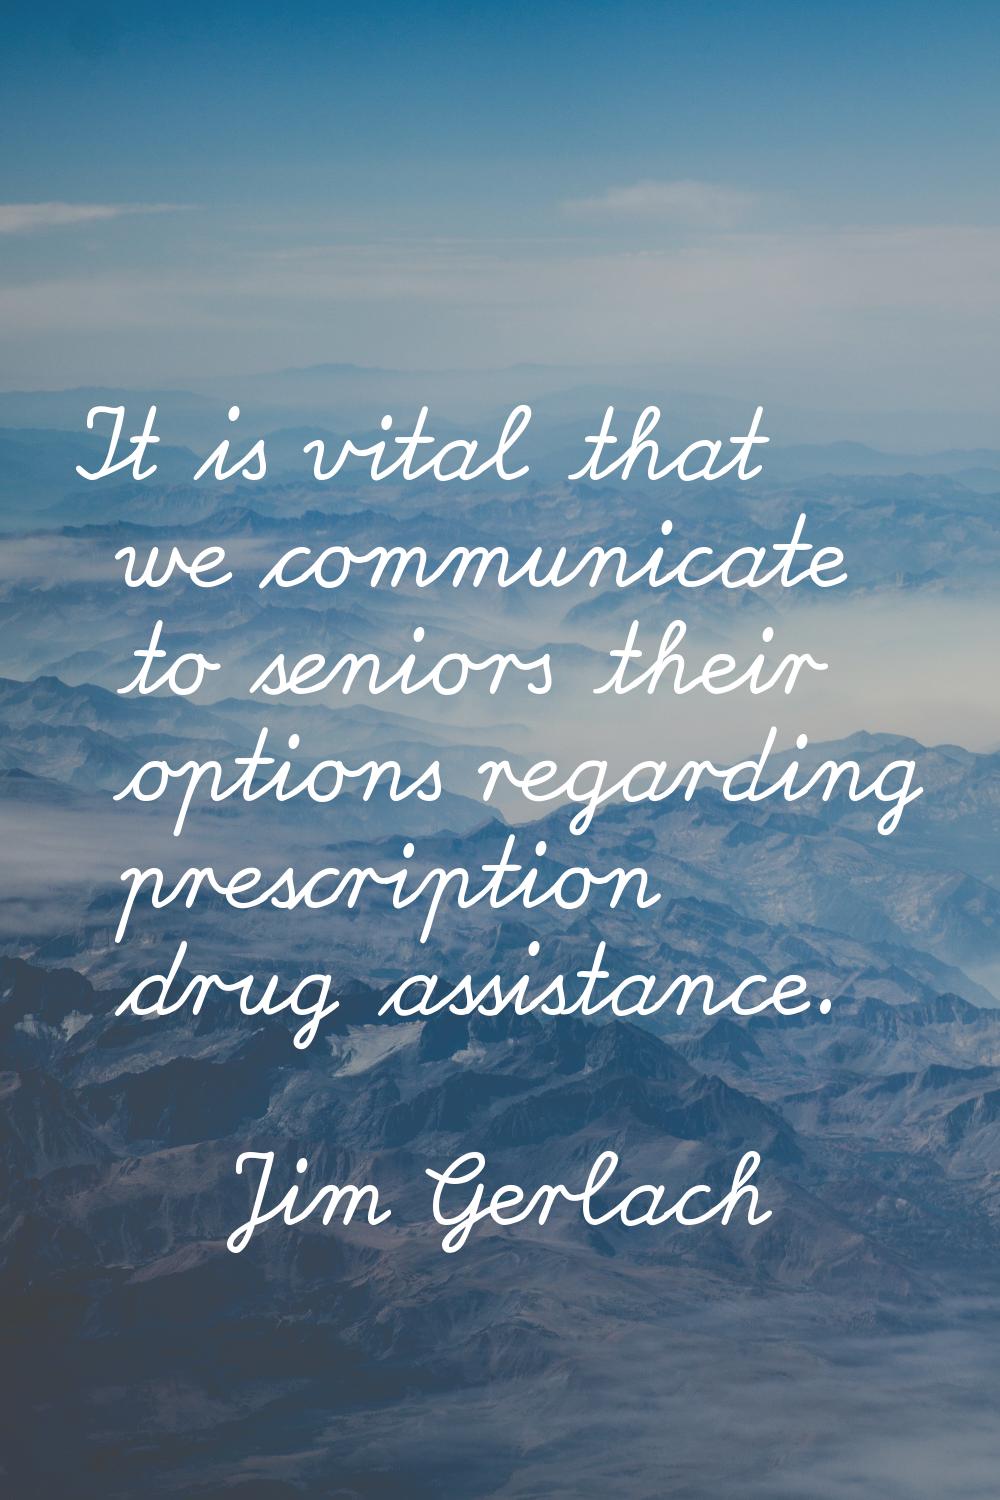 It is vital that we communicate to seniors their options regarding prescription drug assistance.